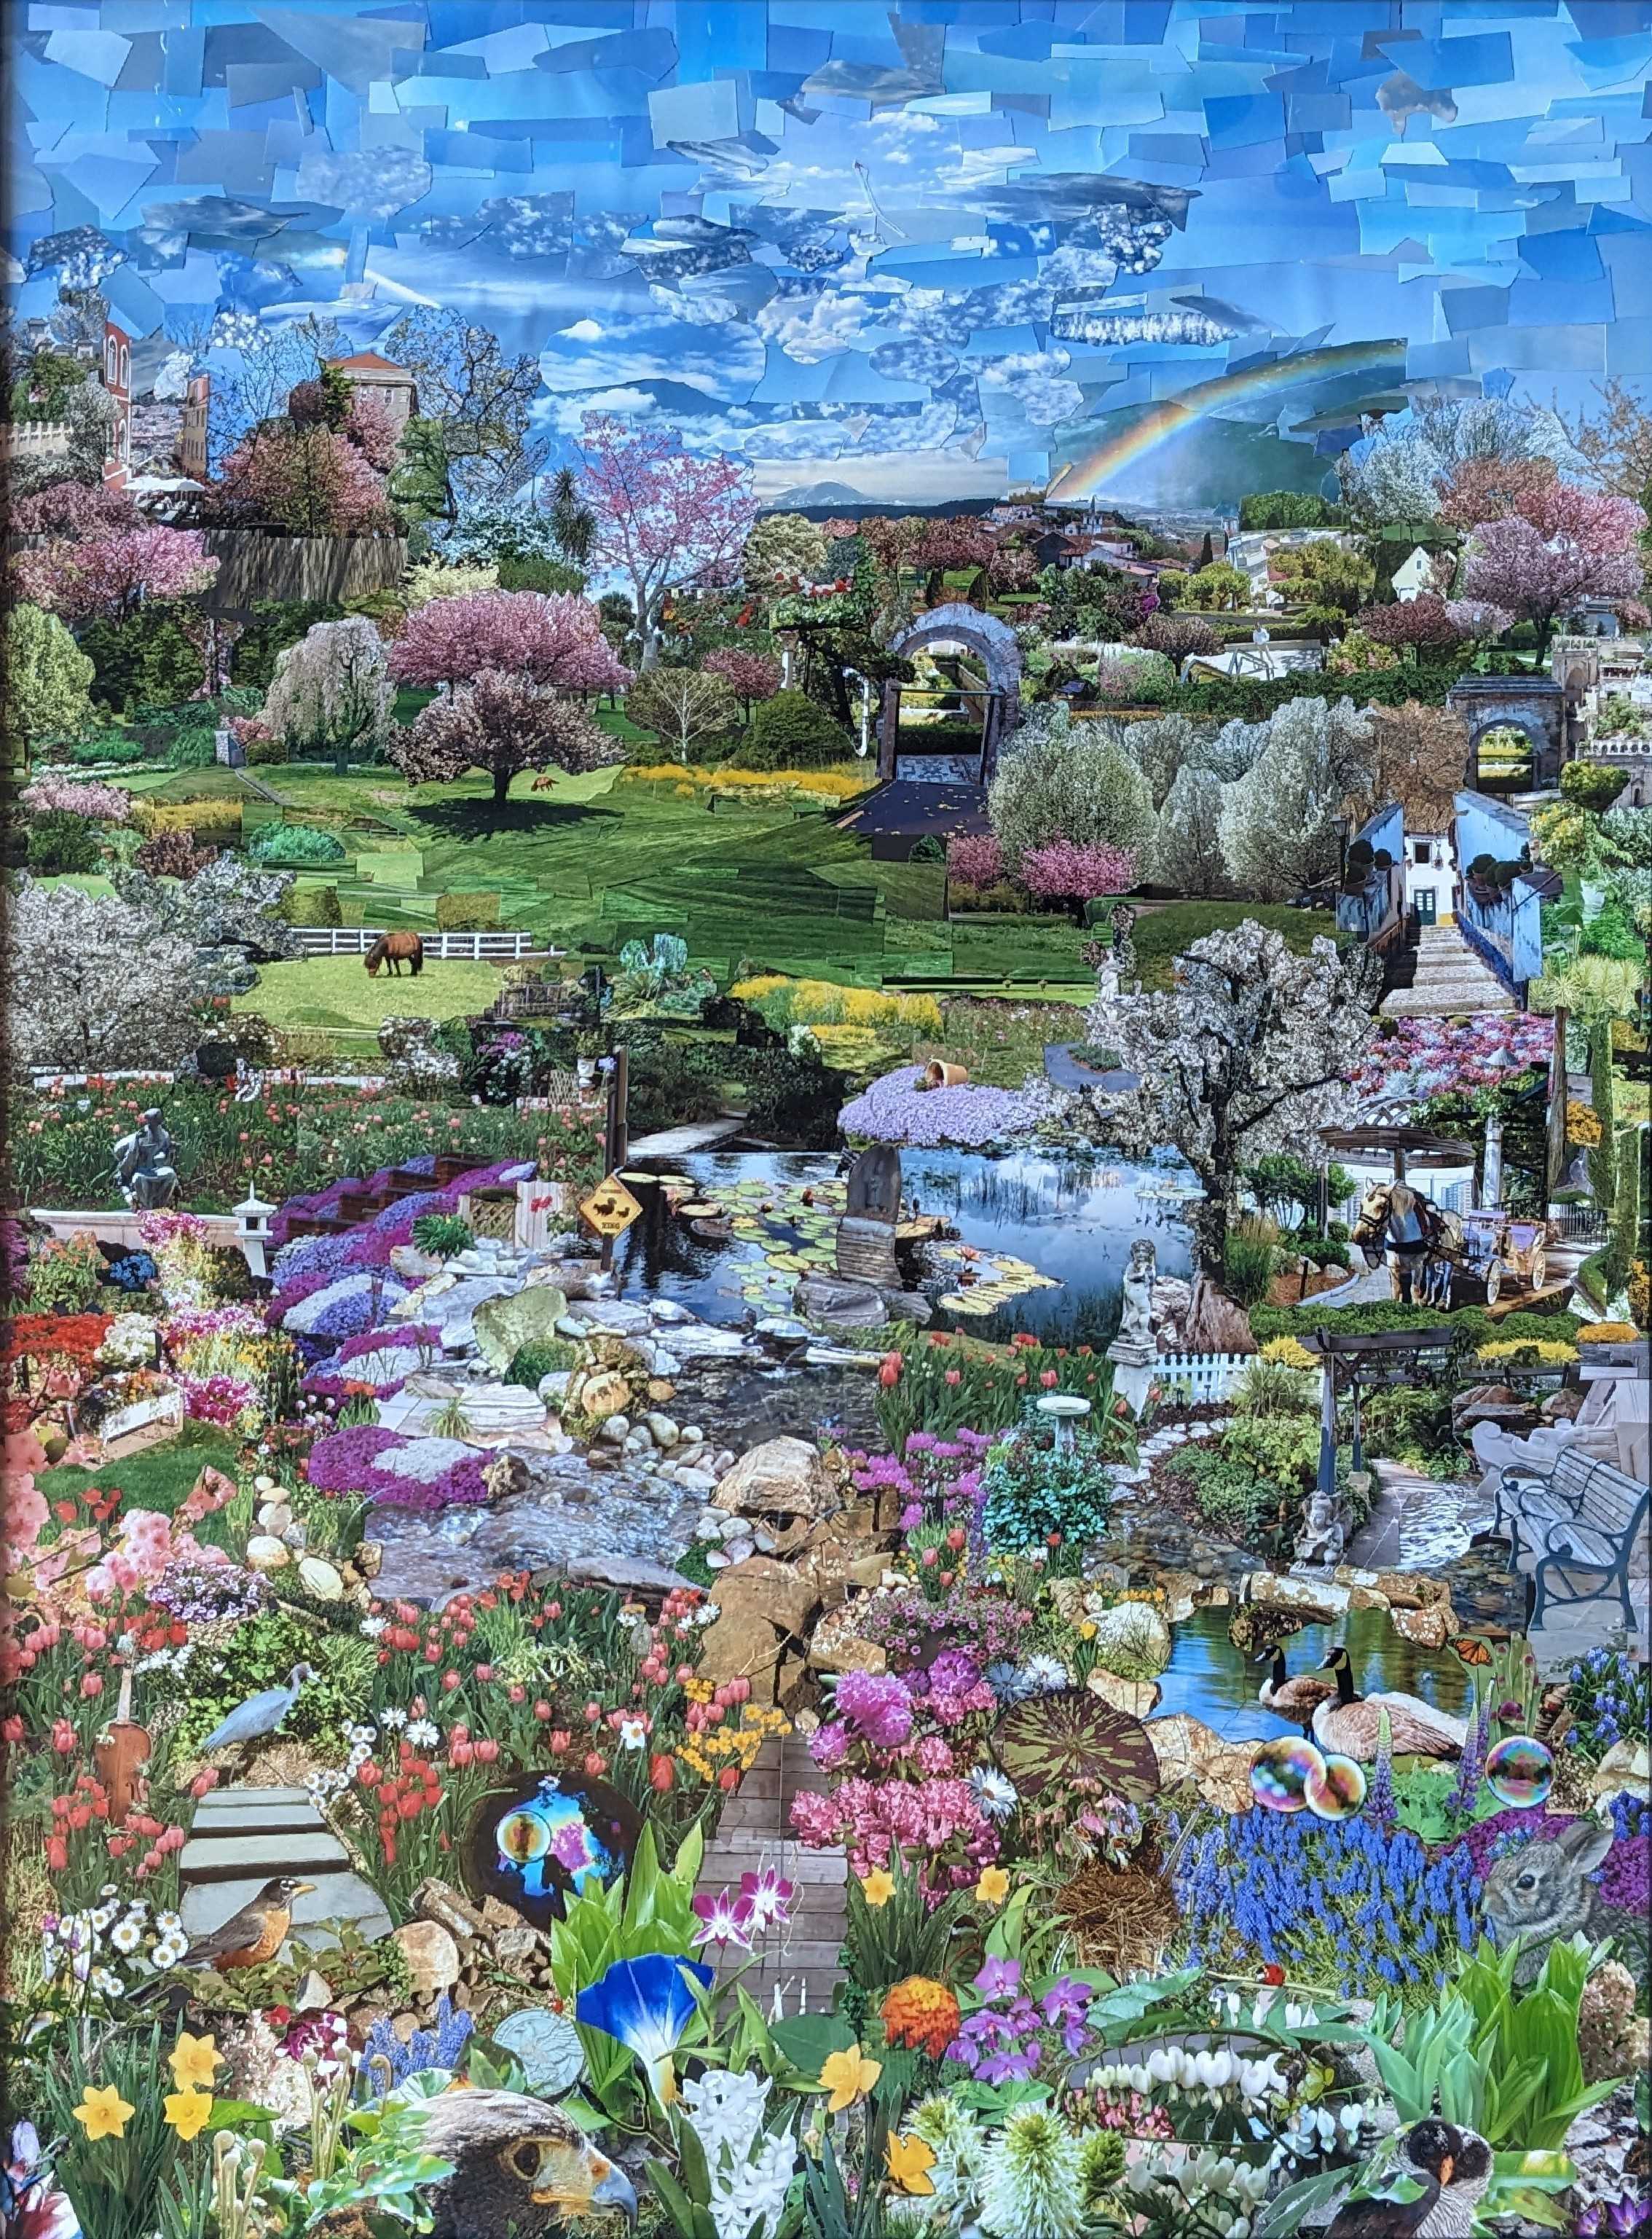 Rashmi Talpade, "Spring Garden," 2018